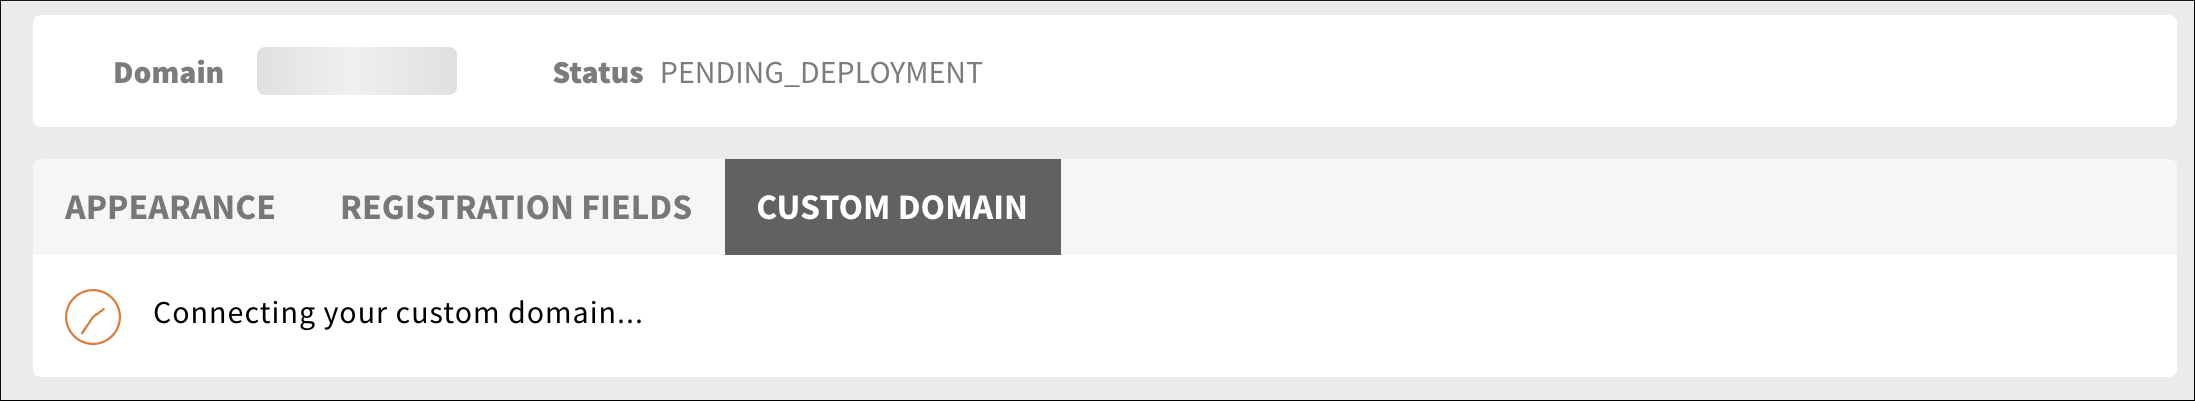 Domain pending deployment